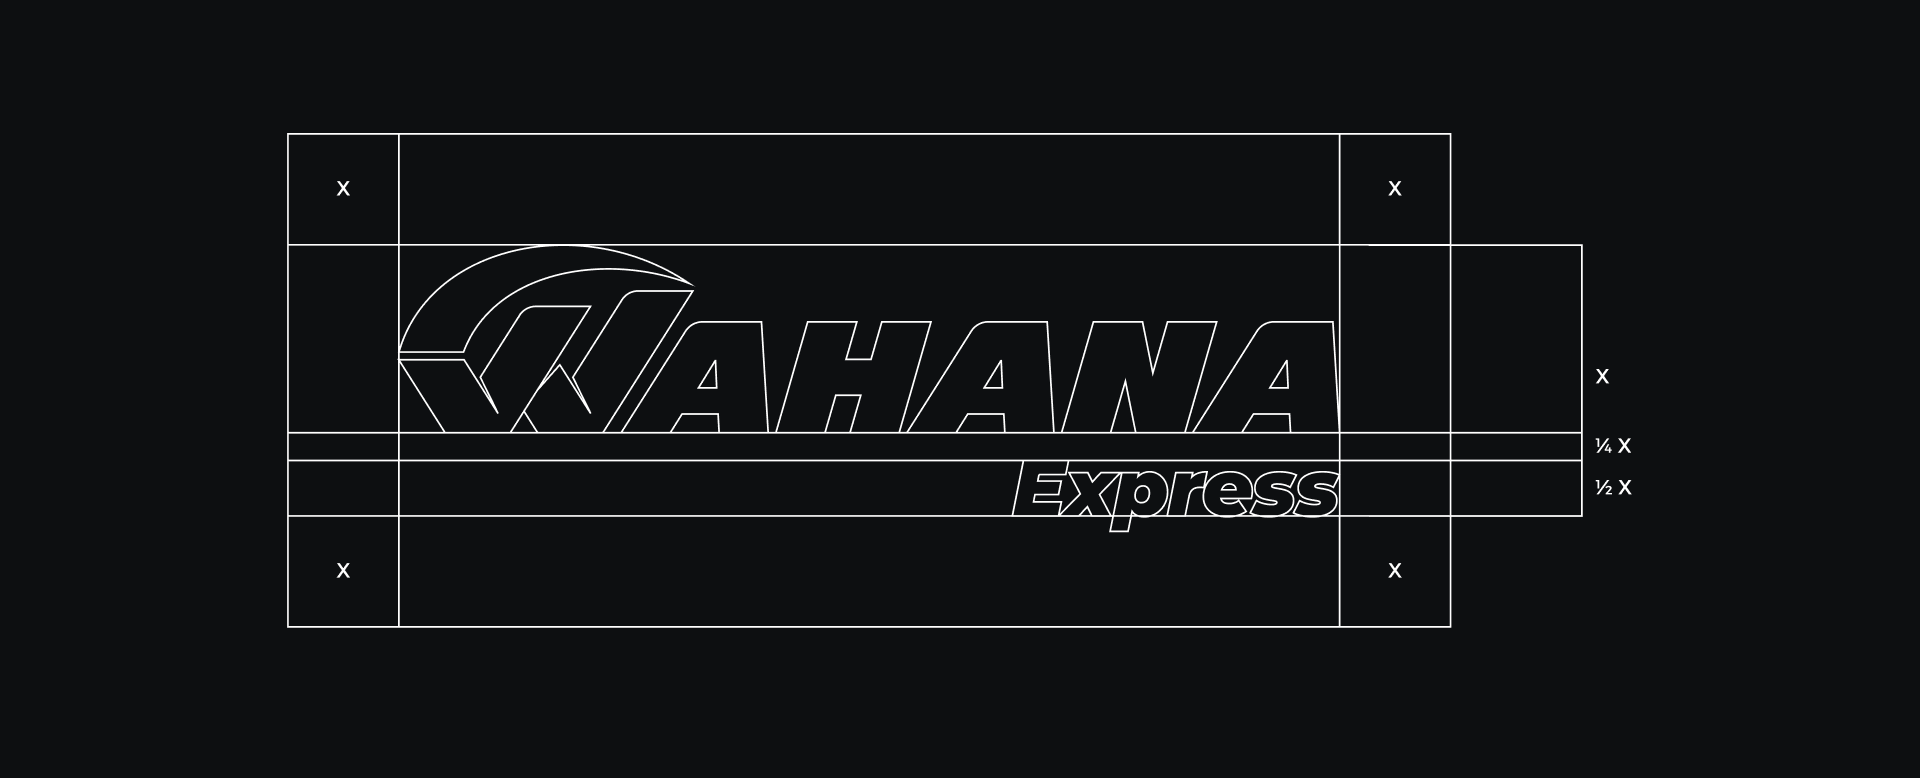 Wahana logo guide